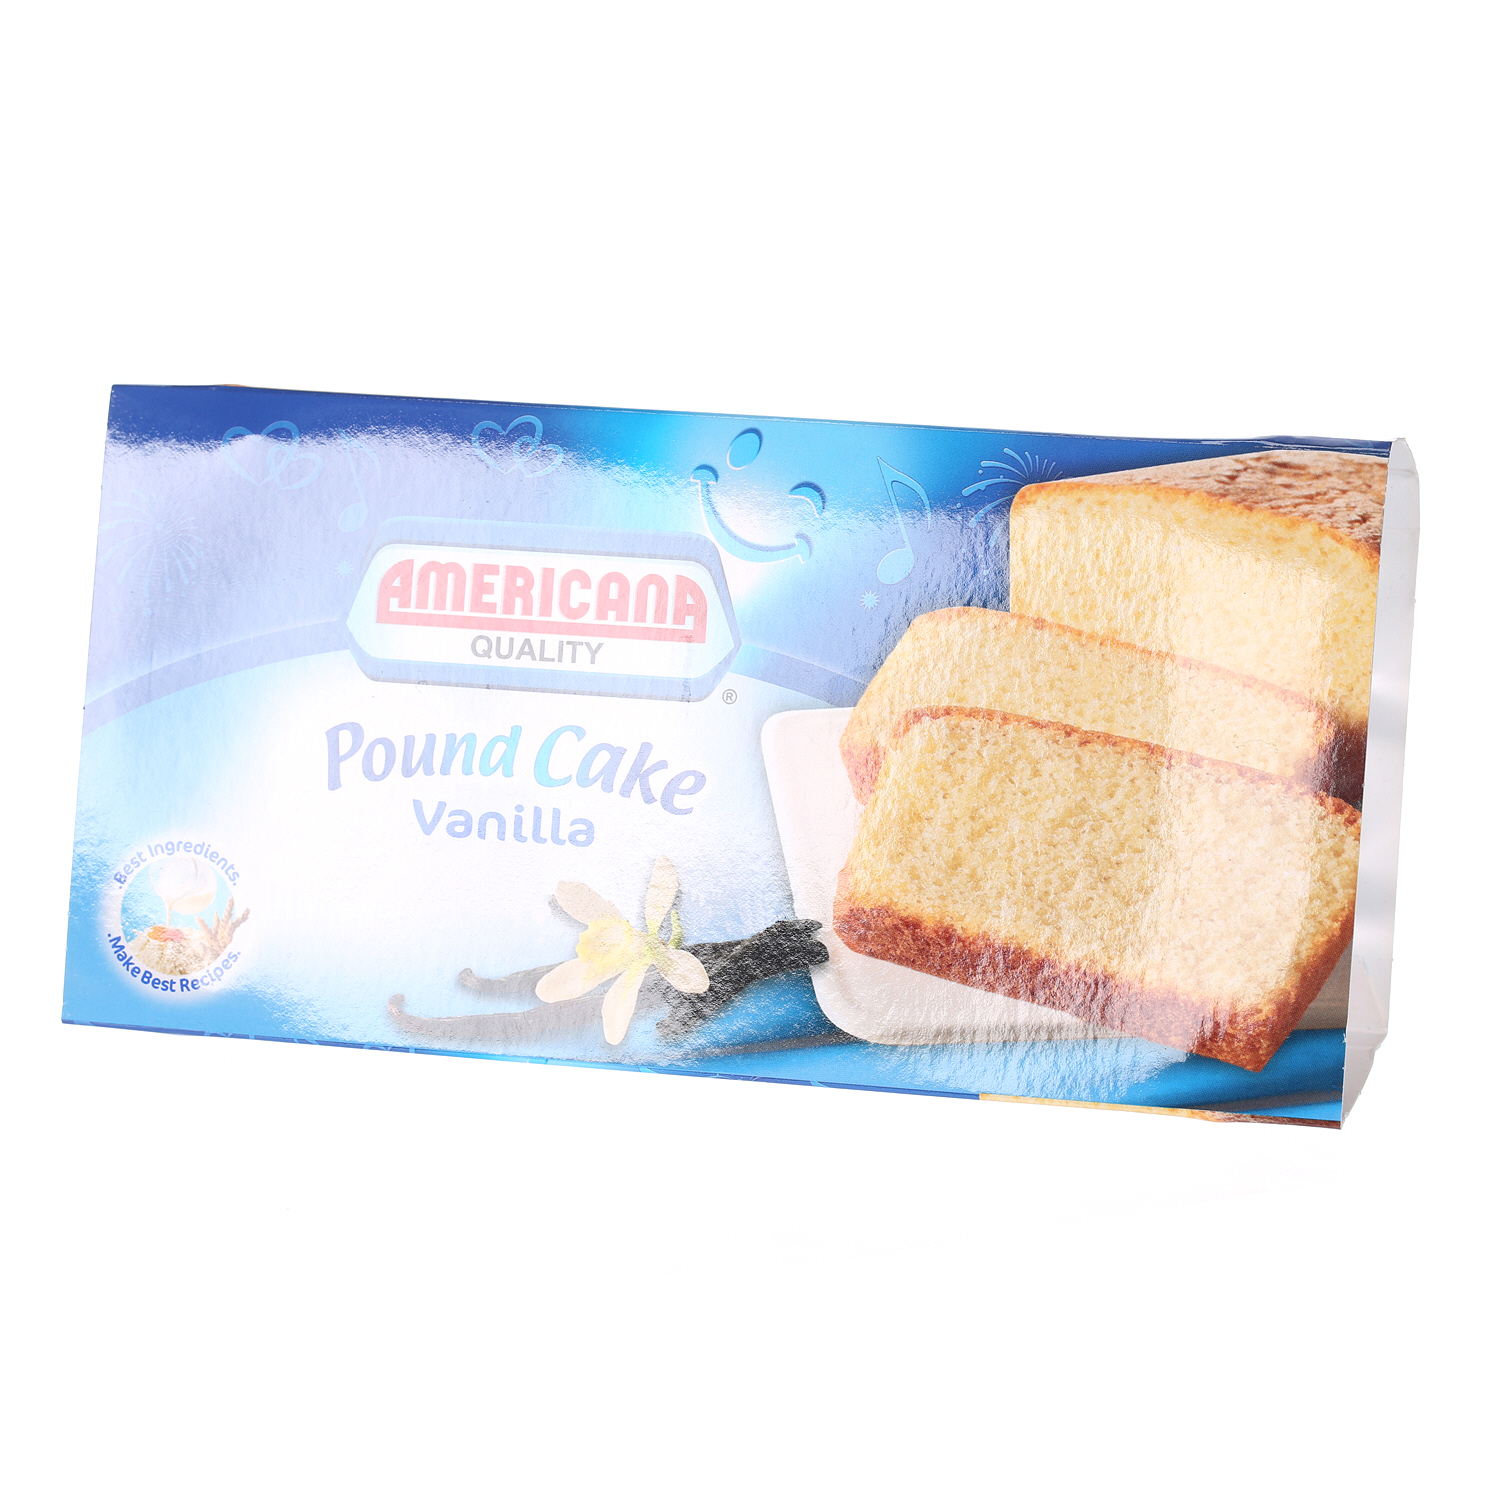 Americana Pound Cake Vanilla 300 g